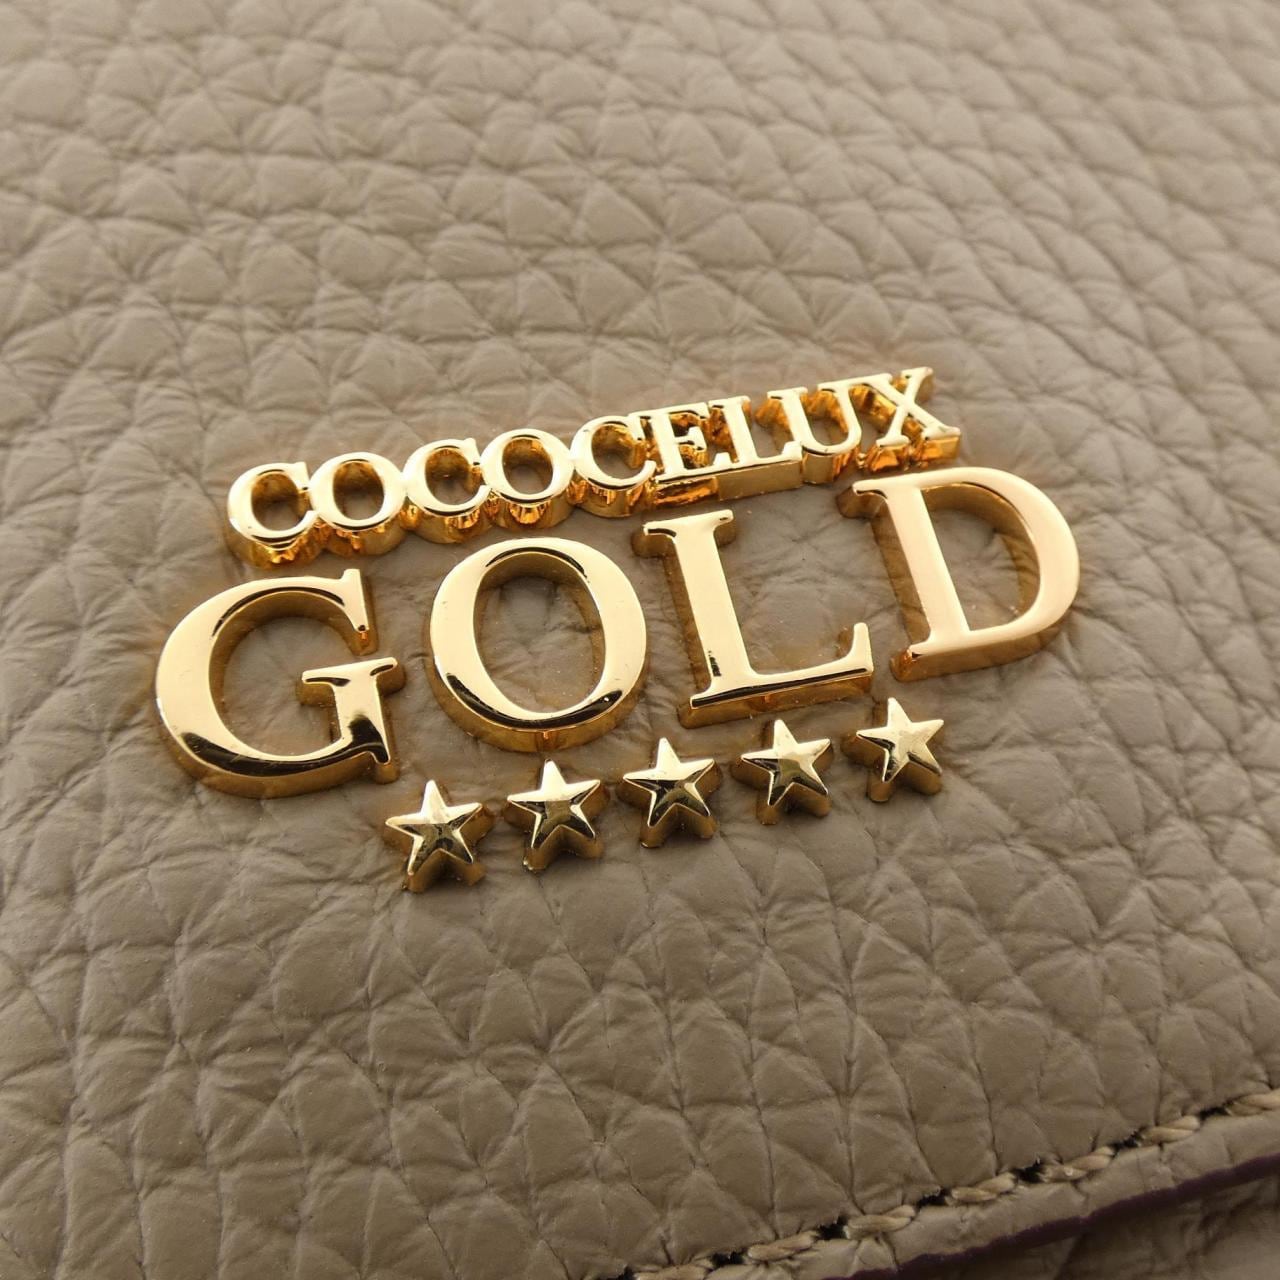 COCOCELUX GOLD金色包